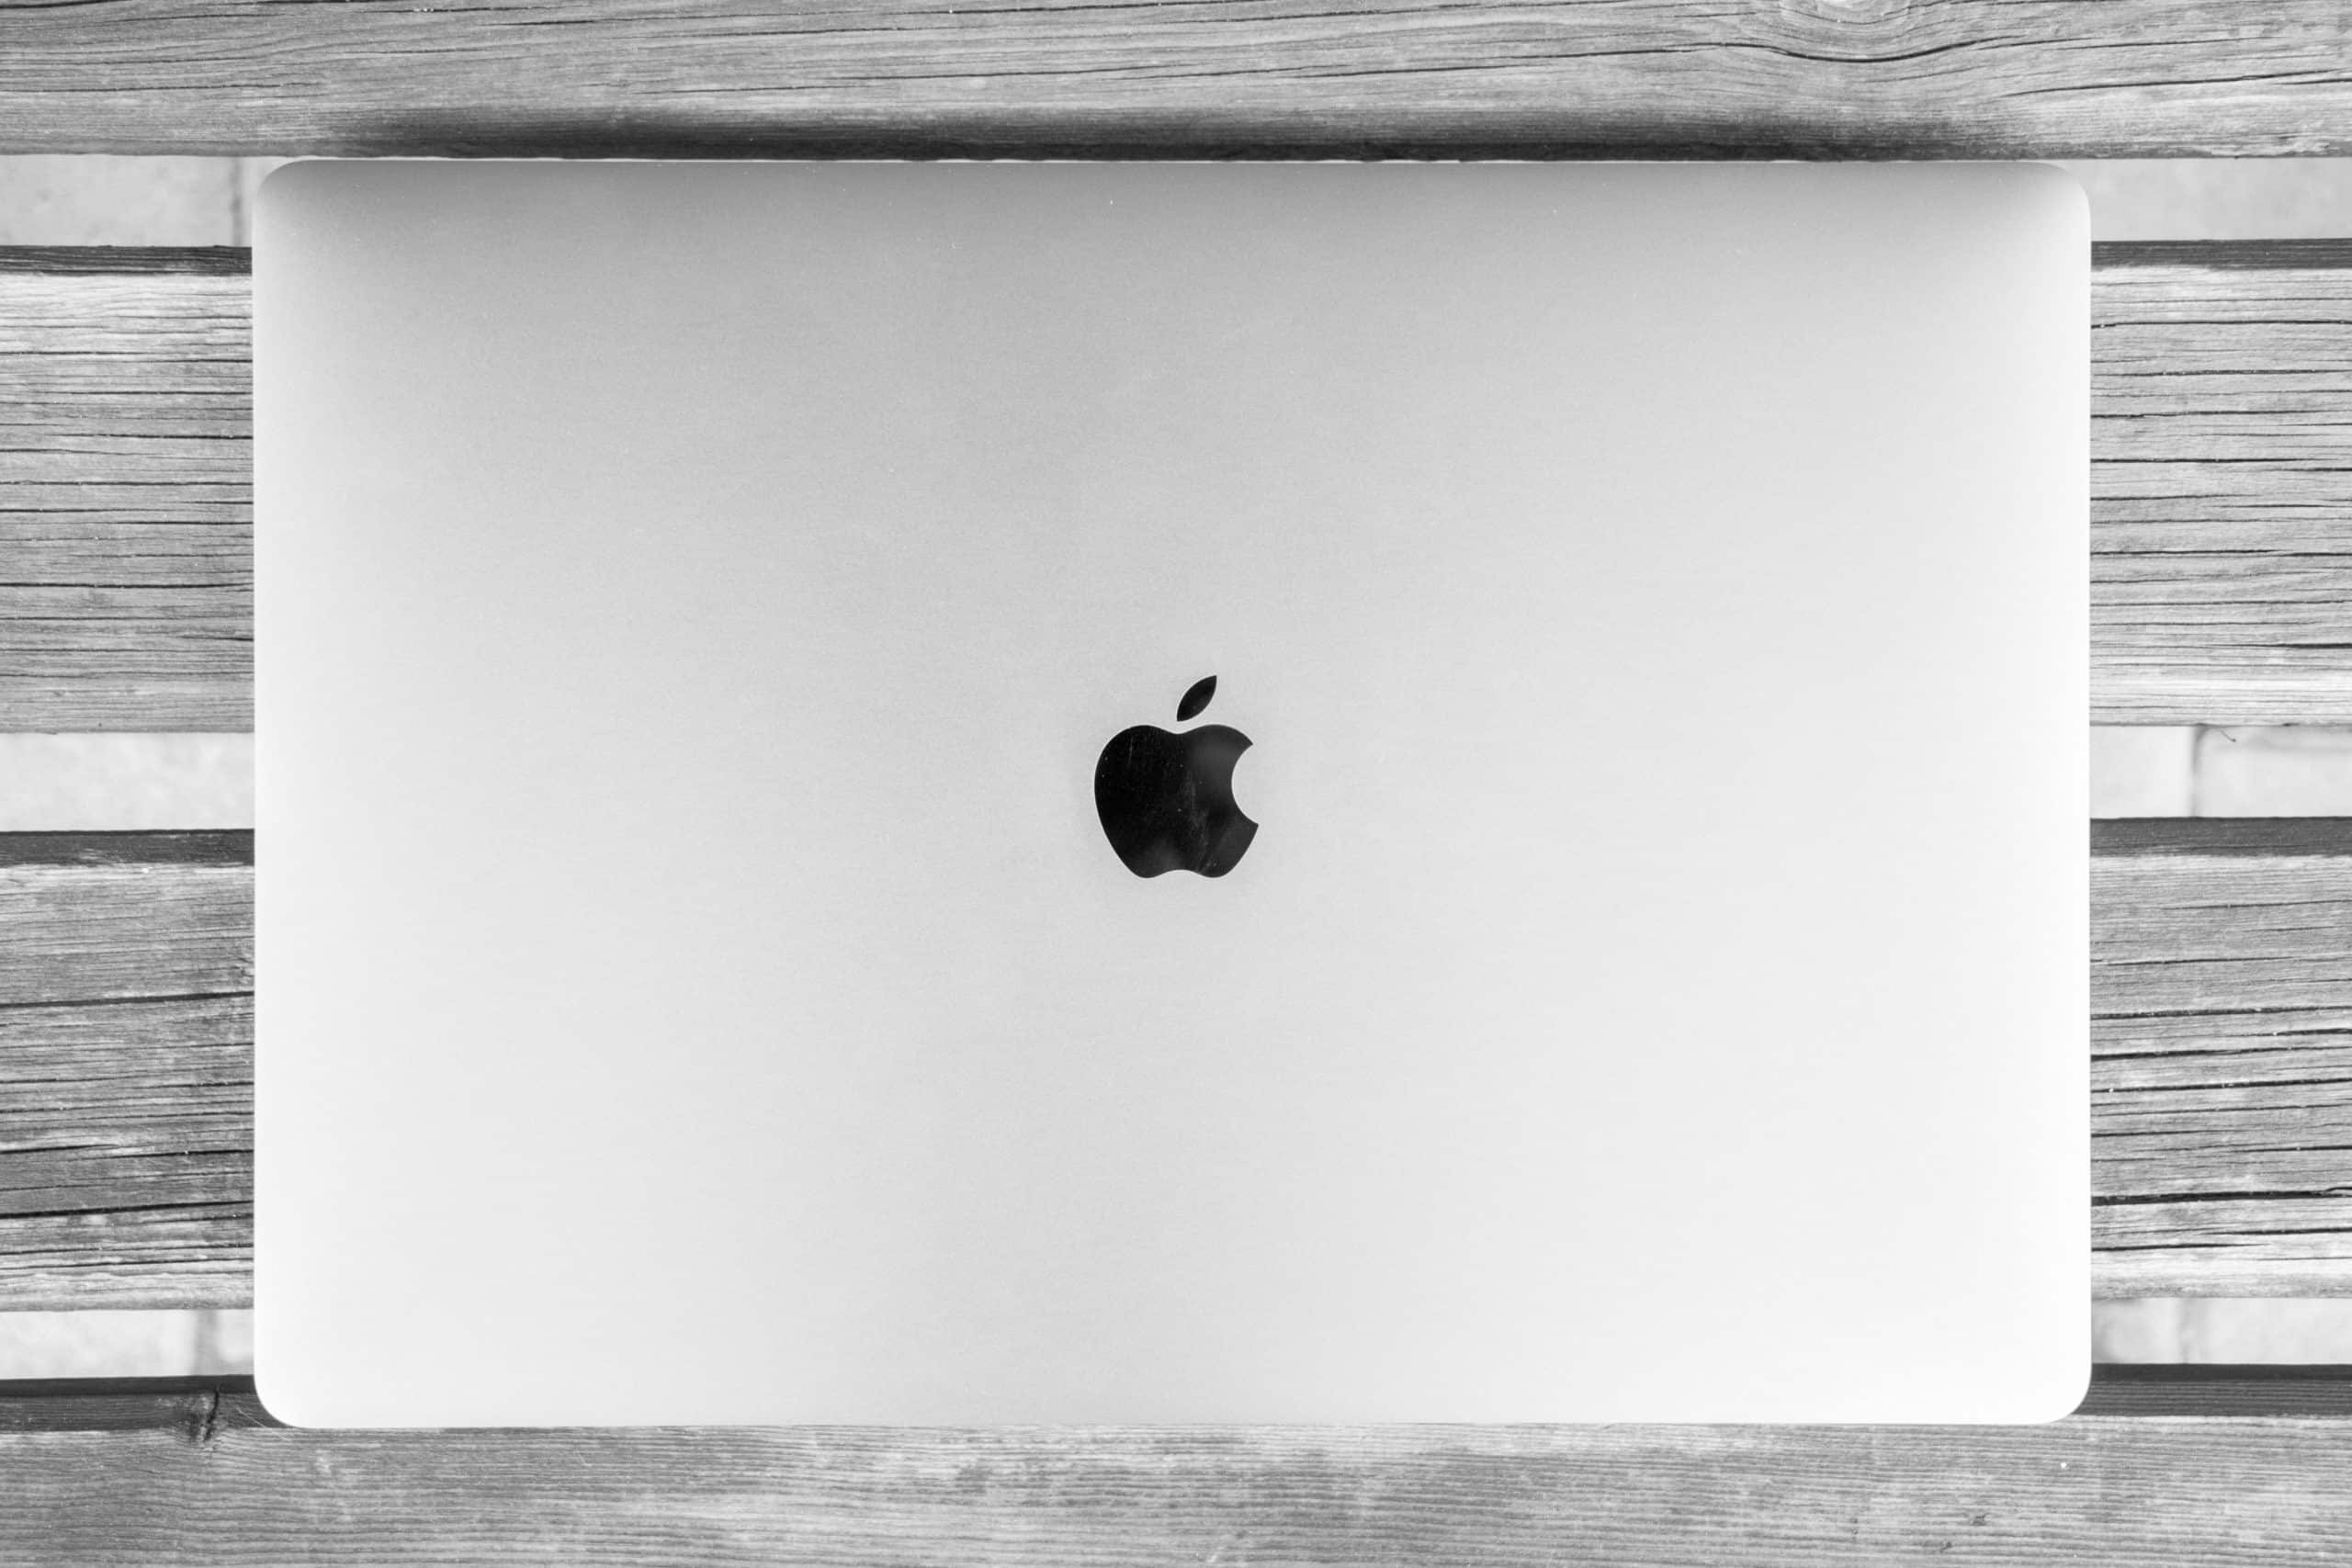 Apple's rebranding efforts transformed the company